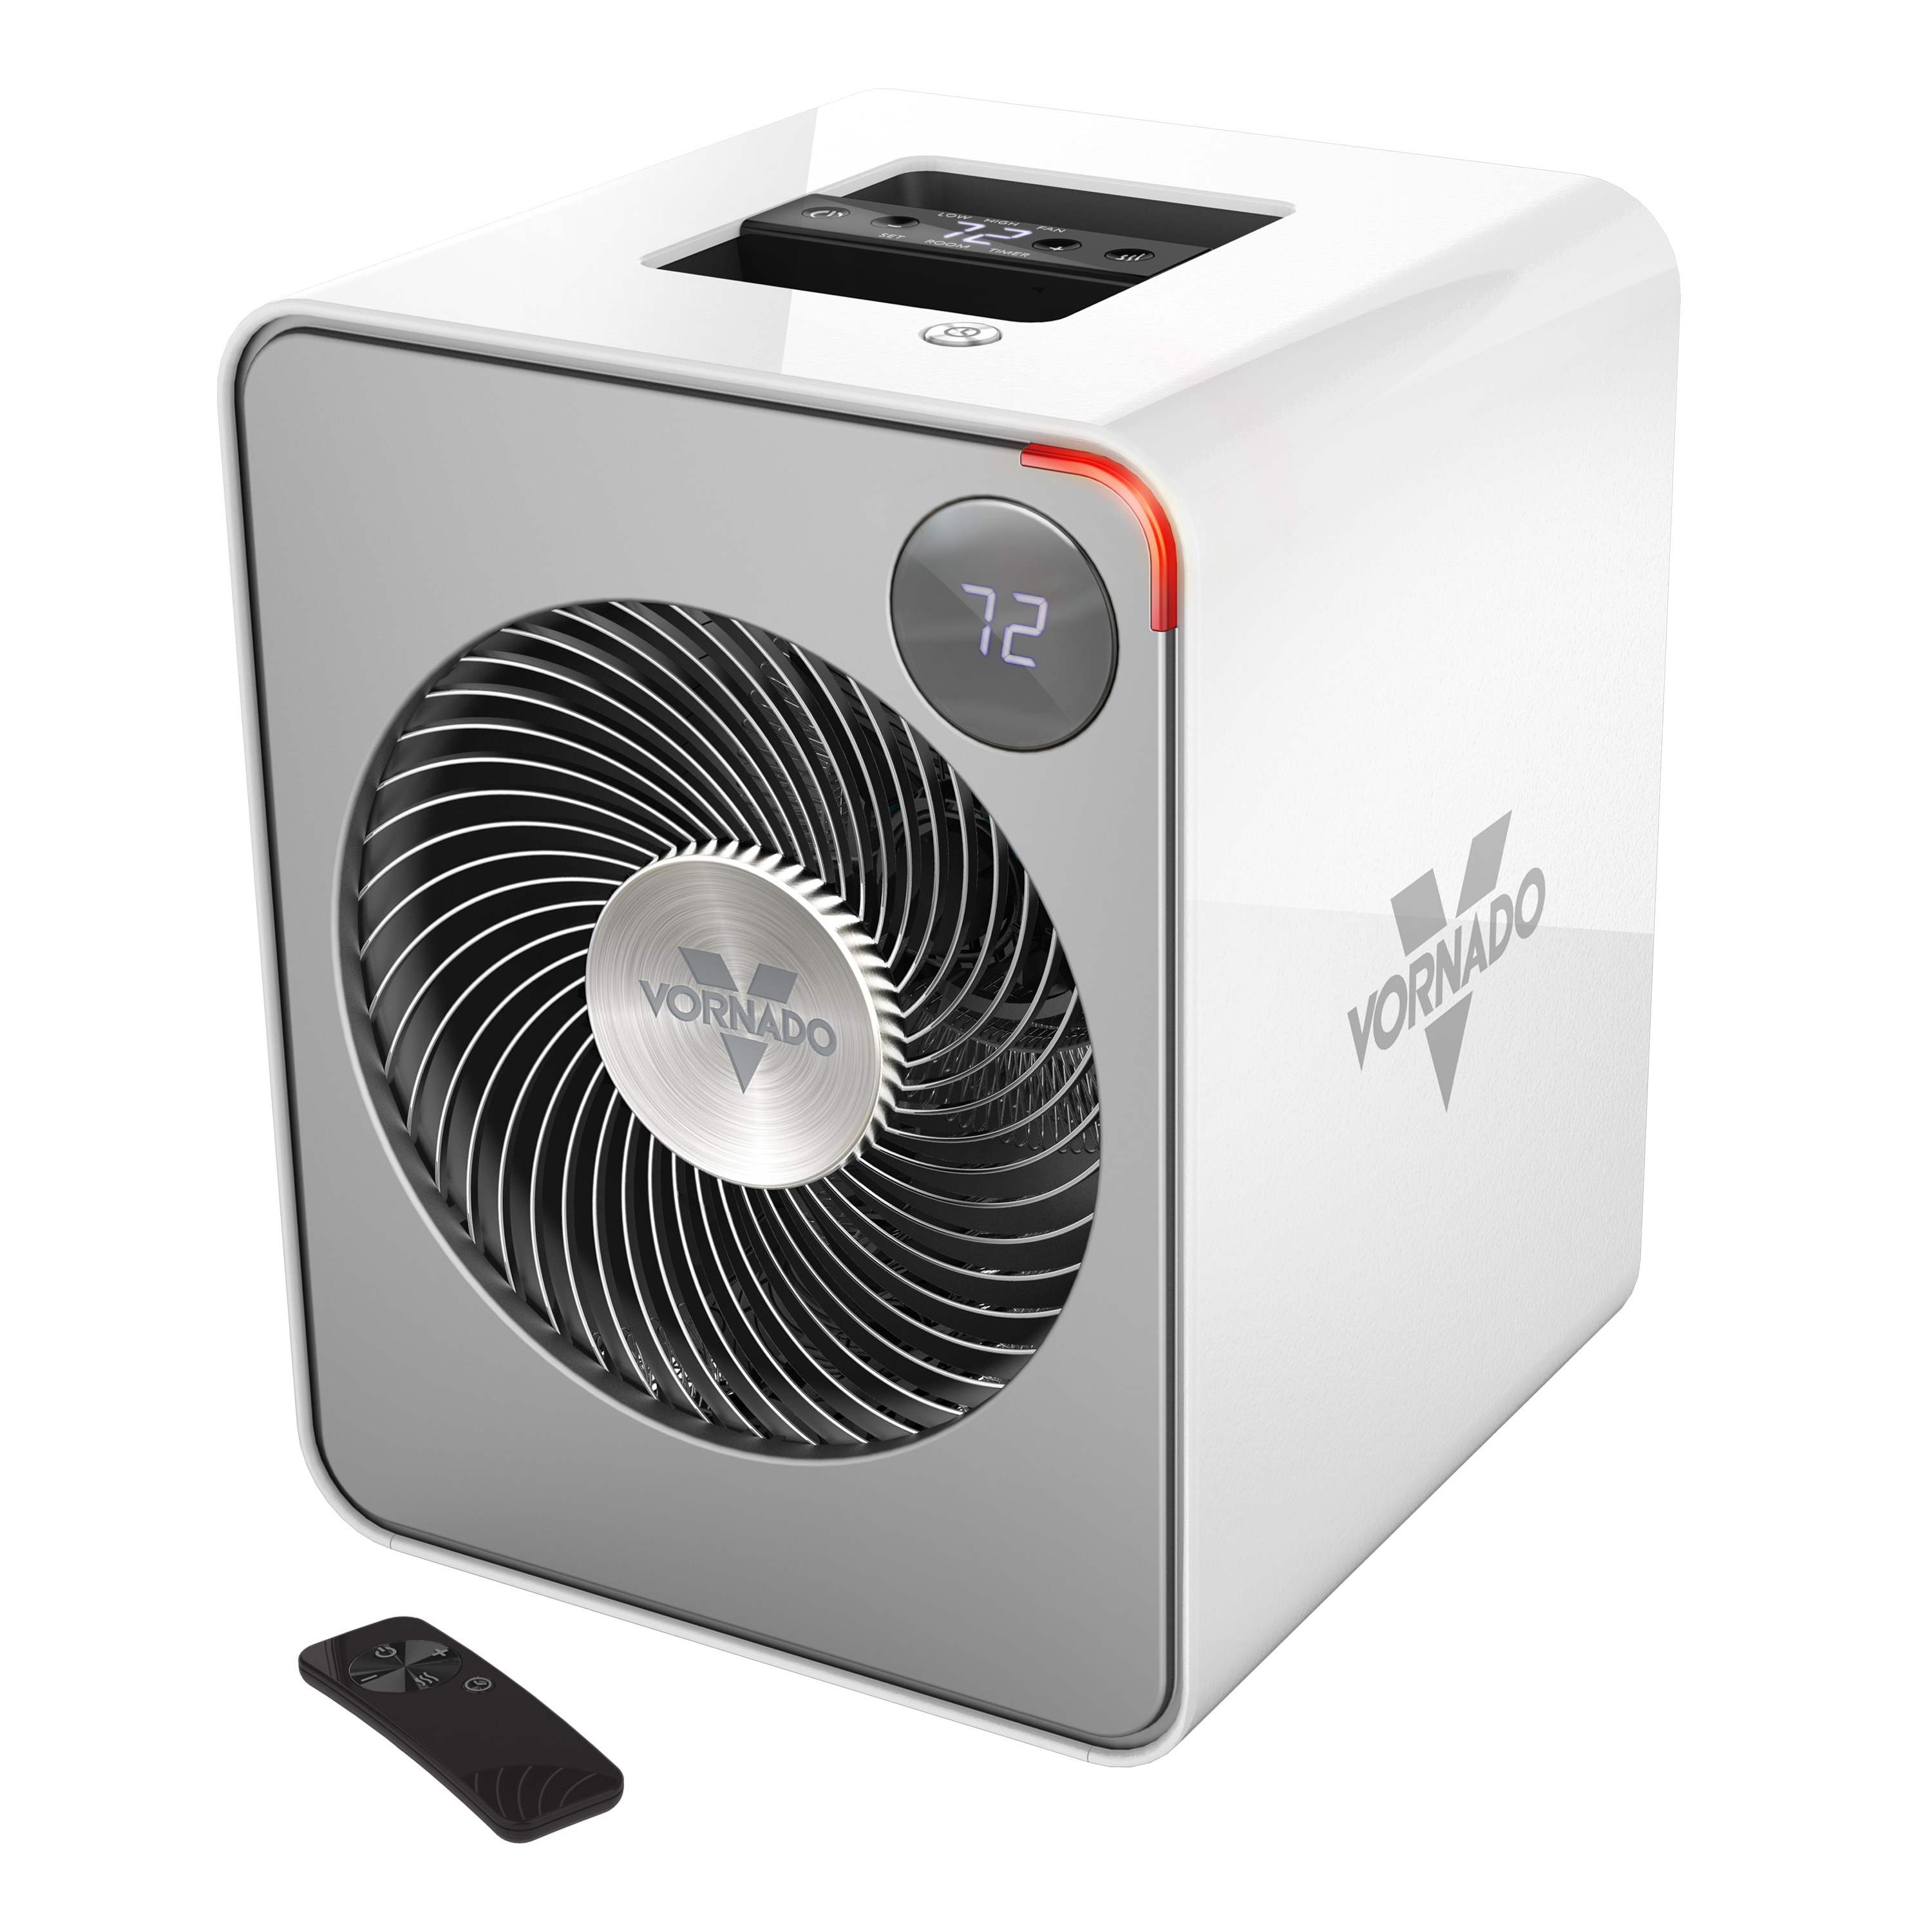 Black+Decker 360 degree Desktop Heater *3 Settings BHDS156 - open box